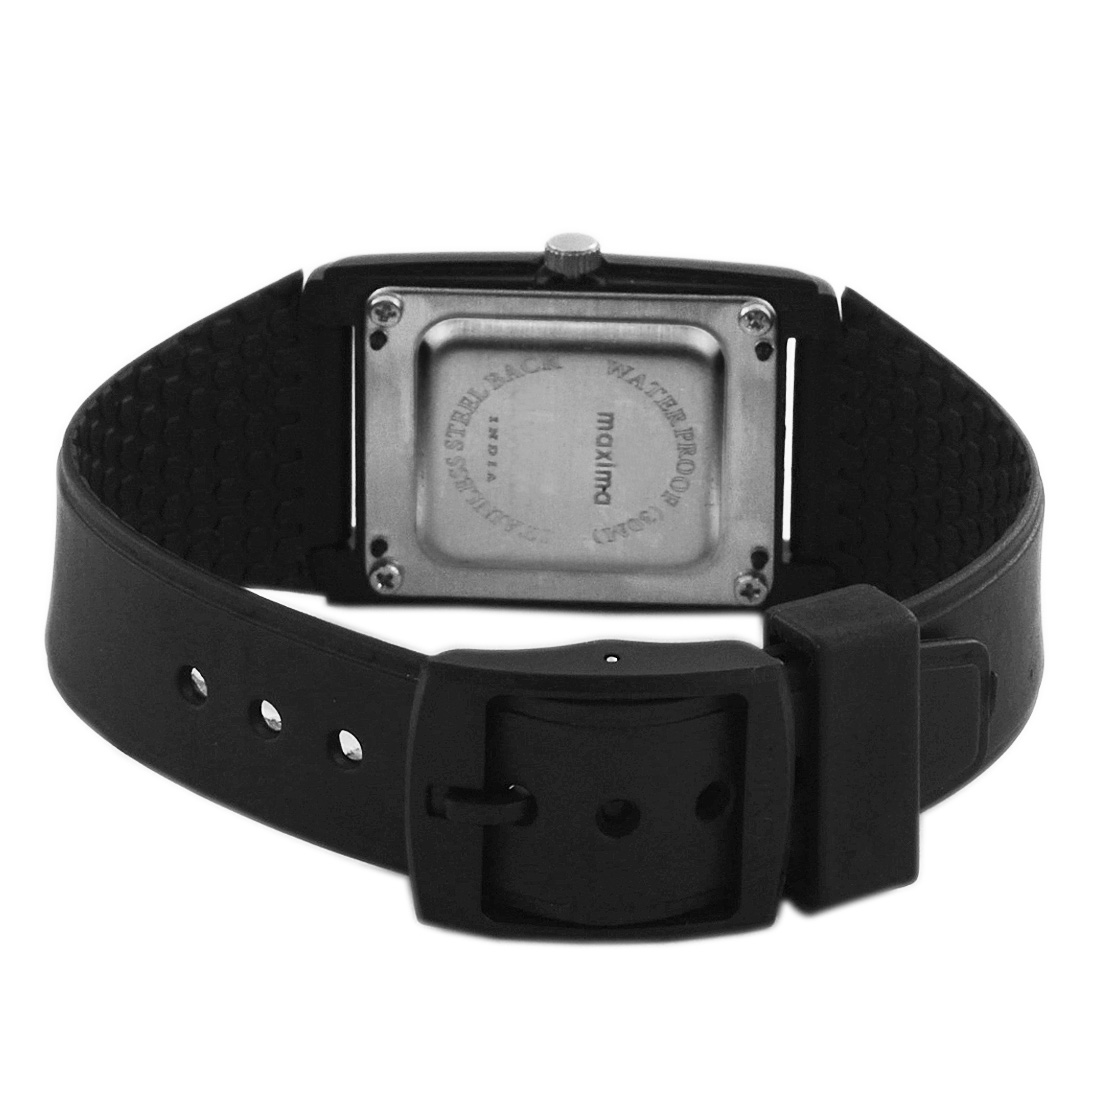 Black Watch - Buy Black Watch online in India